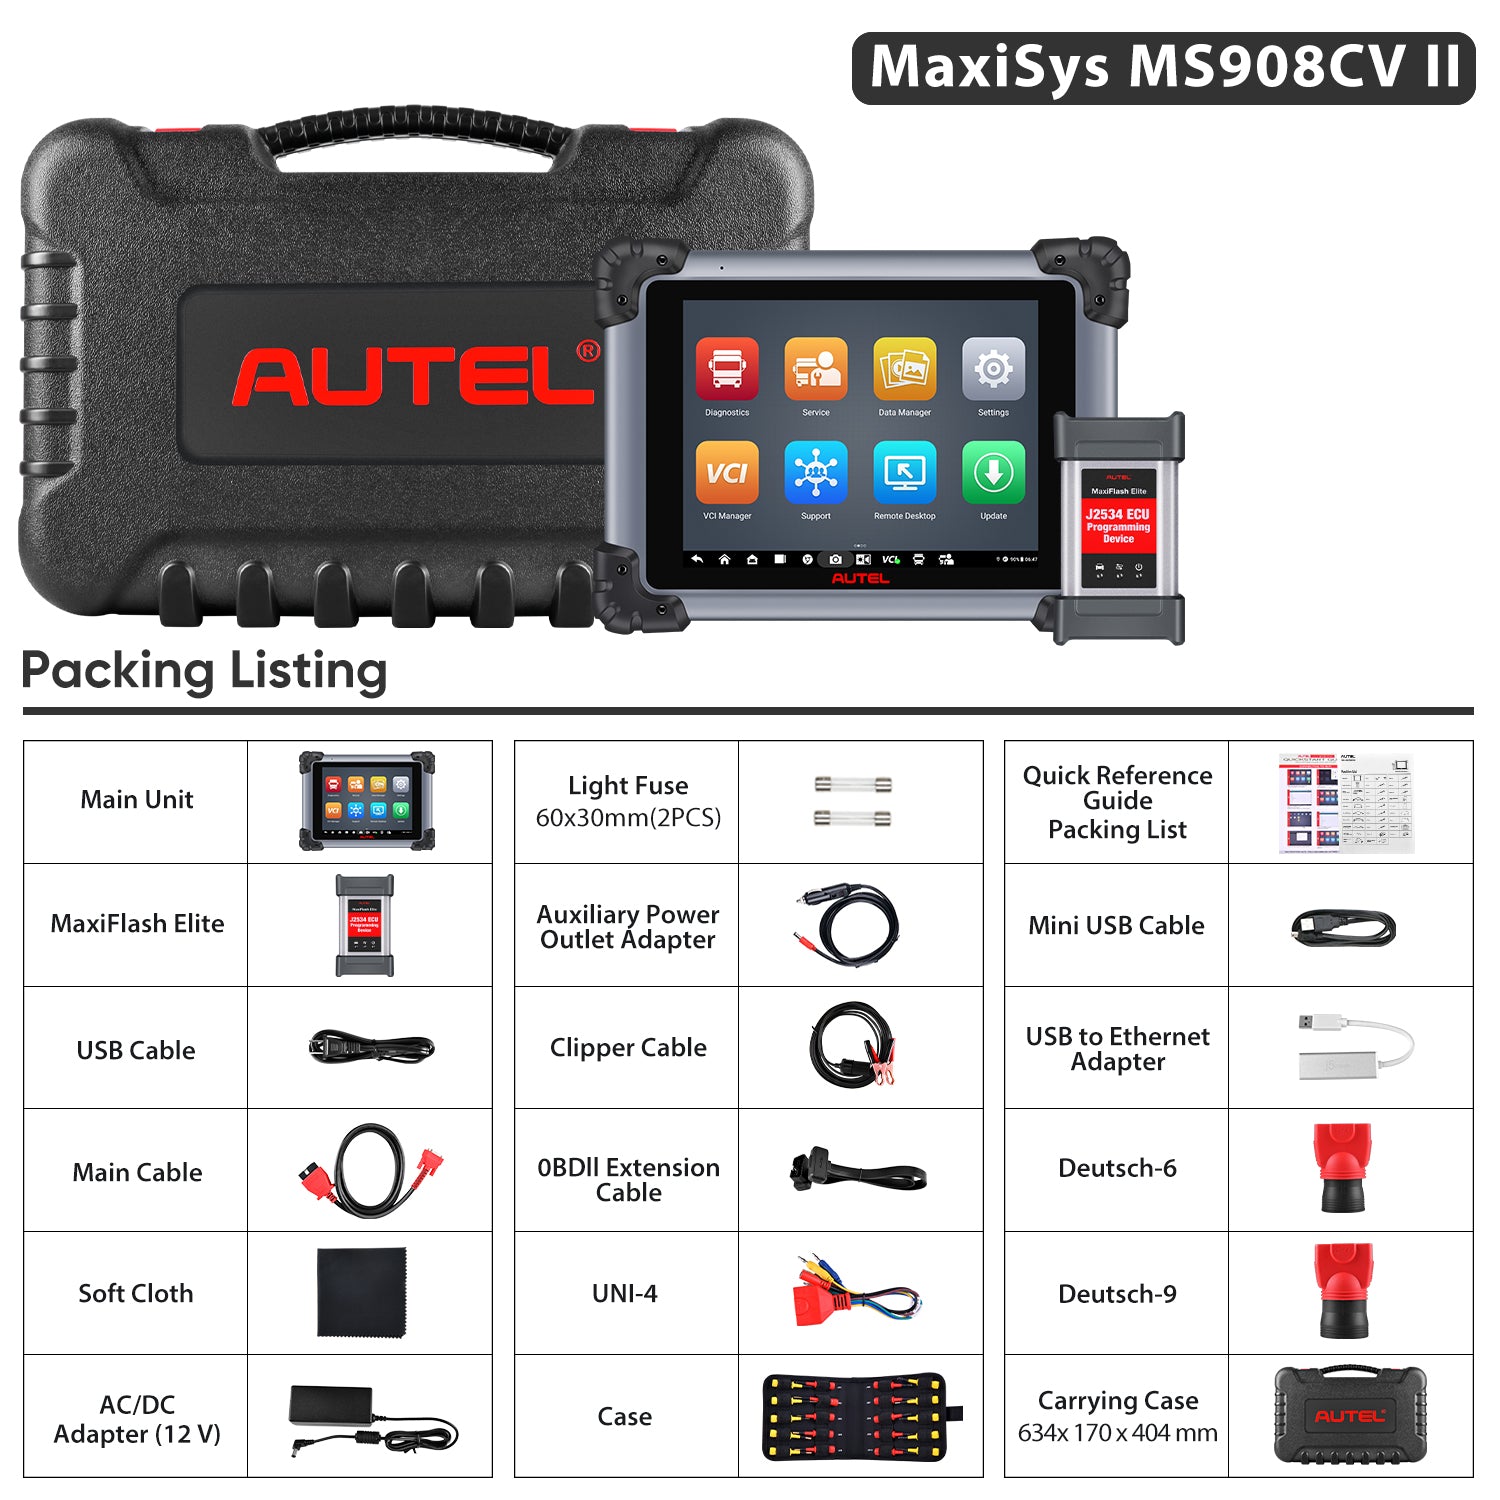 Autel Maxisys MS908CV II Packing List